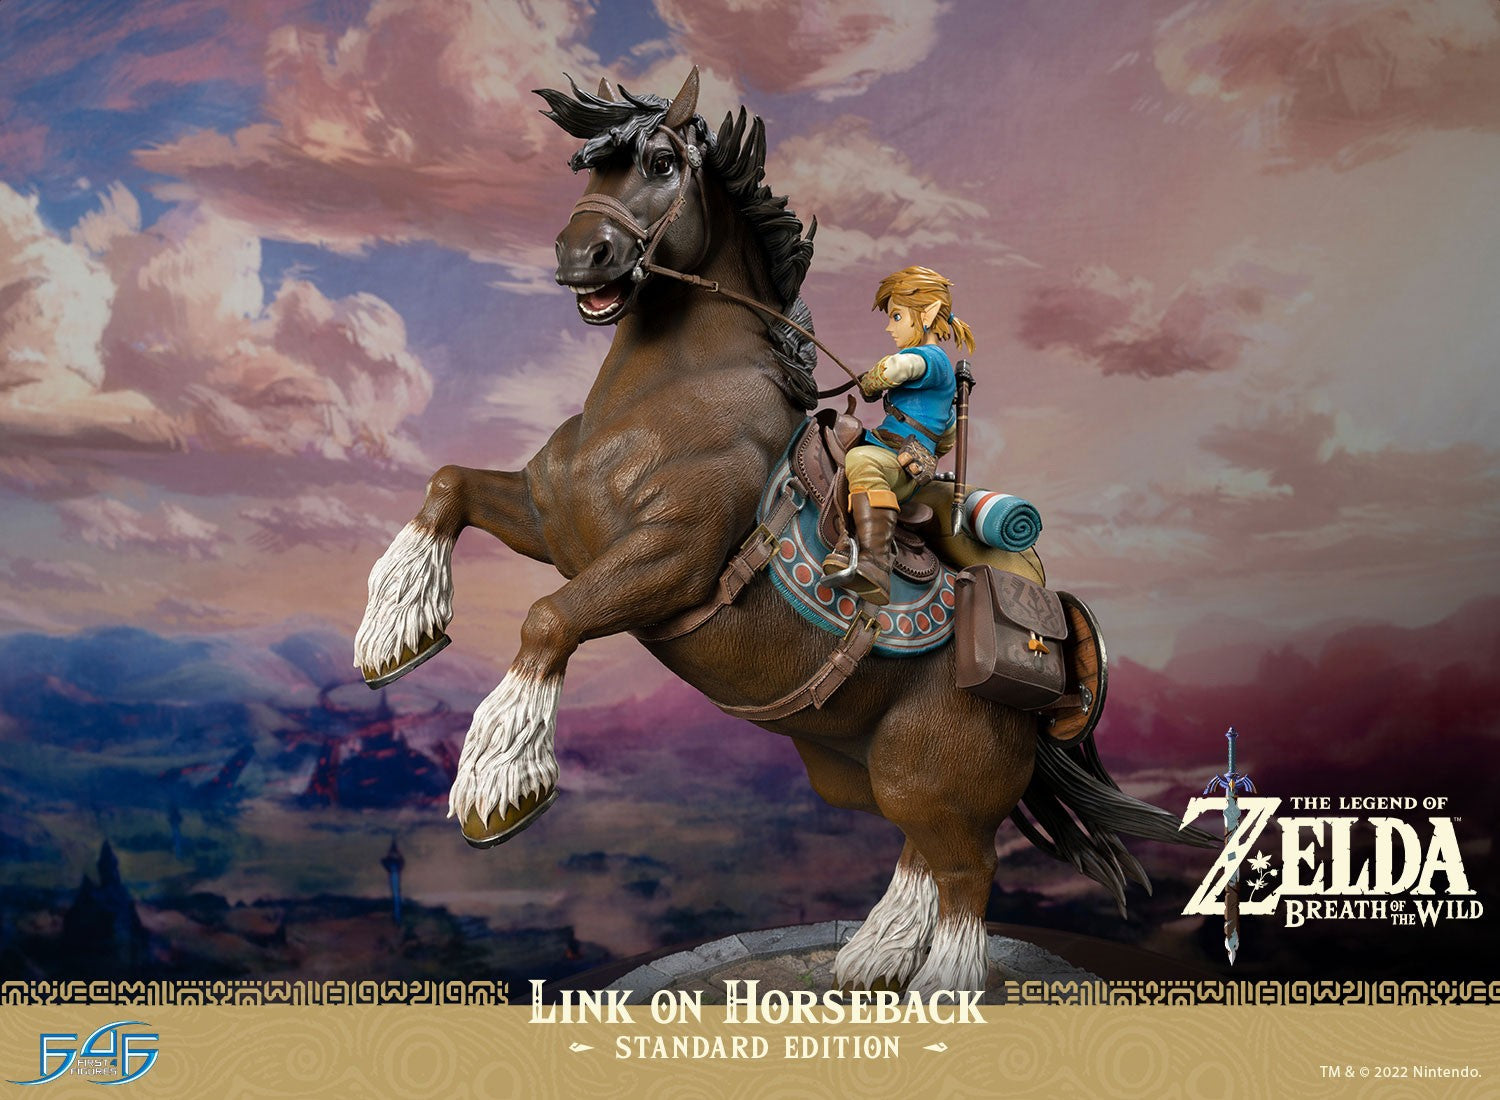 First 4 Figures The Legend of Zelda: Breath of The Wild: Link Figure, Blue